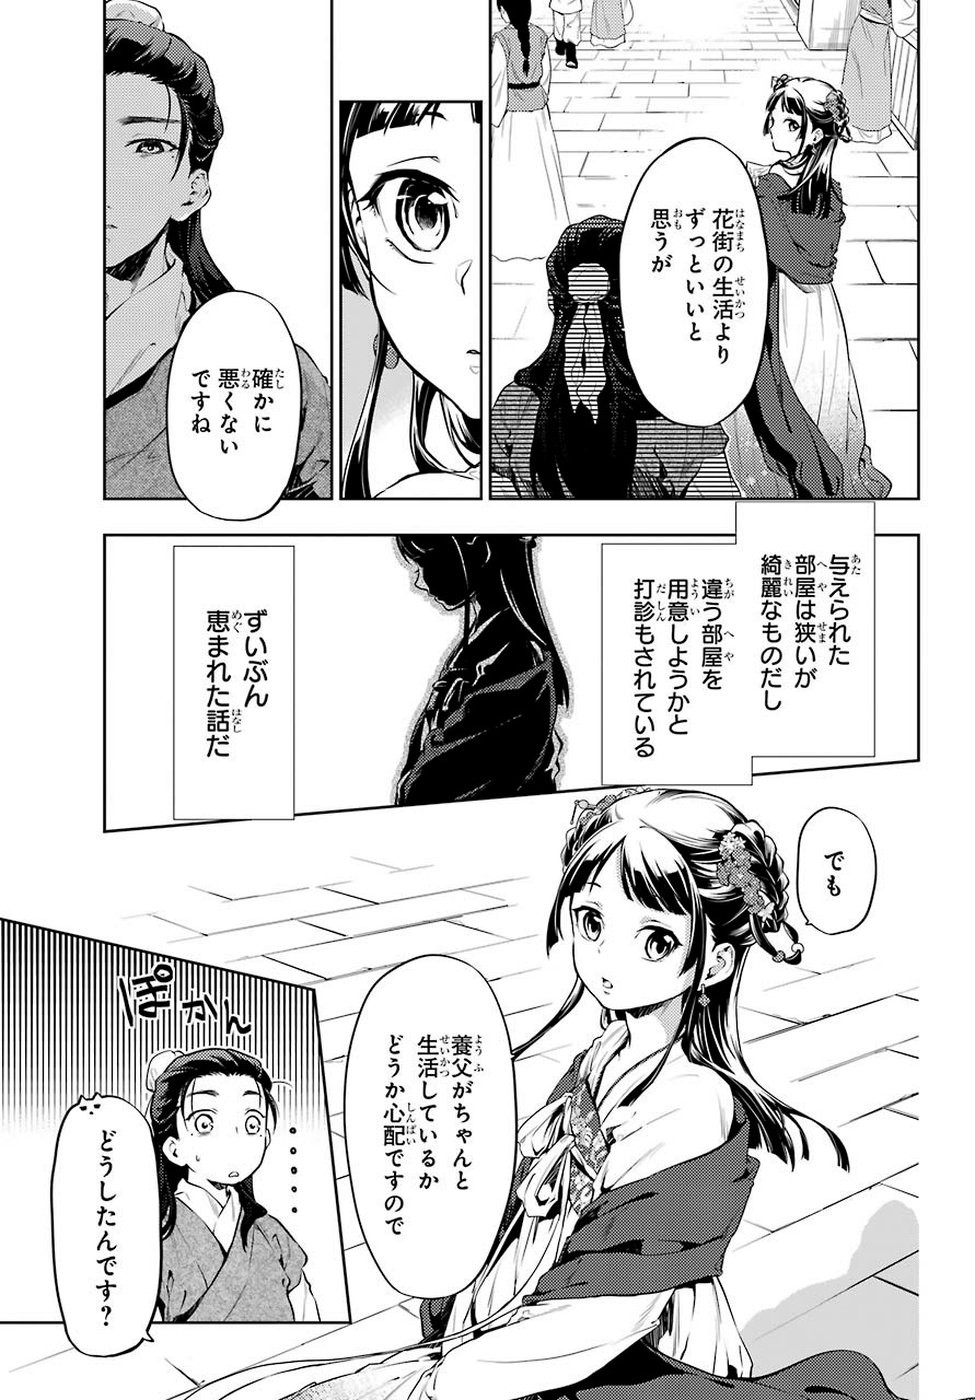 Kusuriya no Hitorigoto - Chapter 28-1 - Page 3